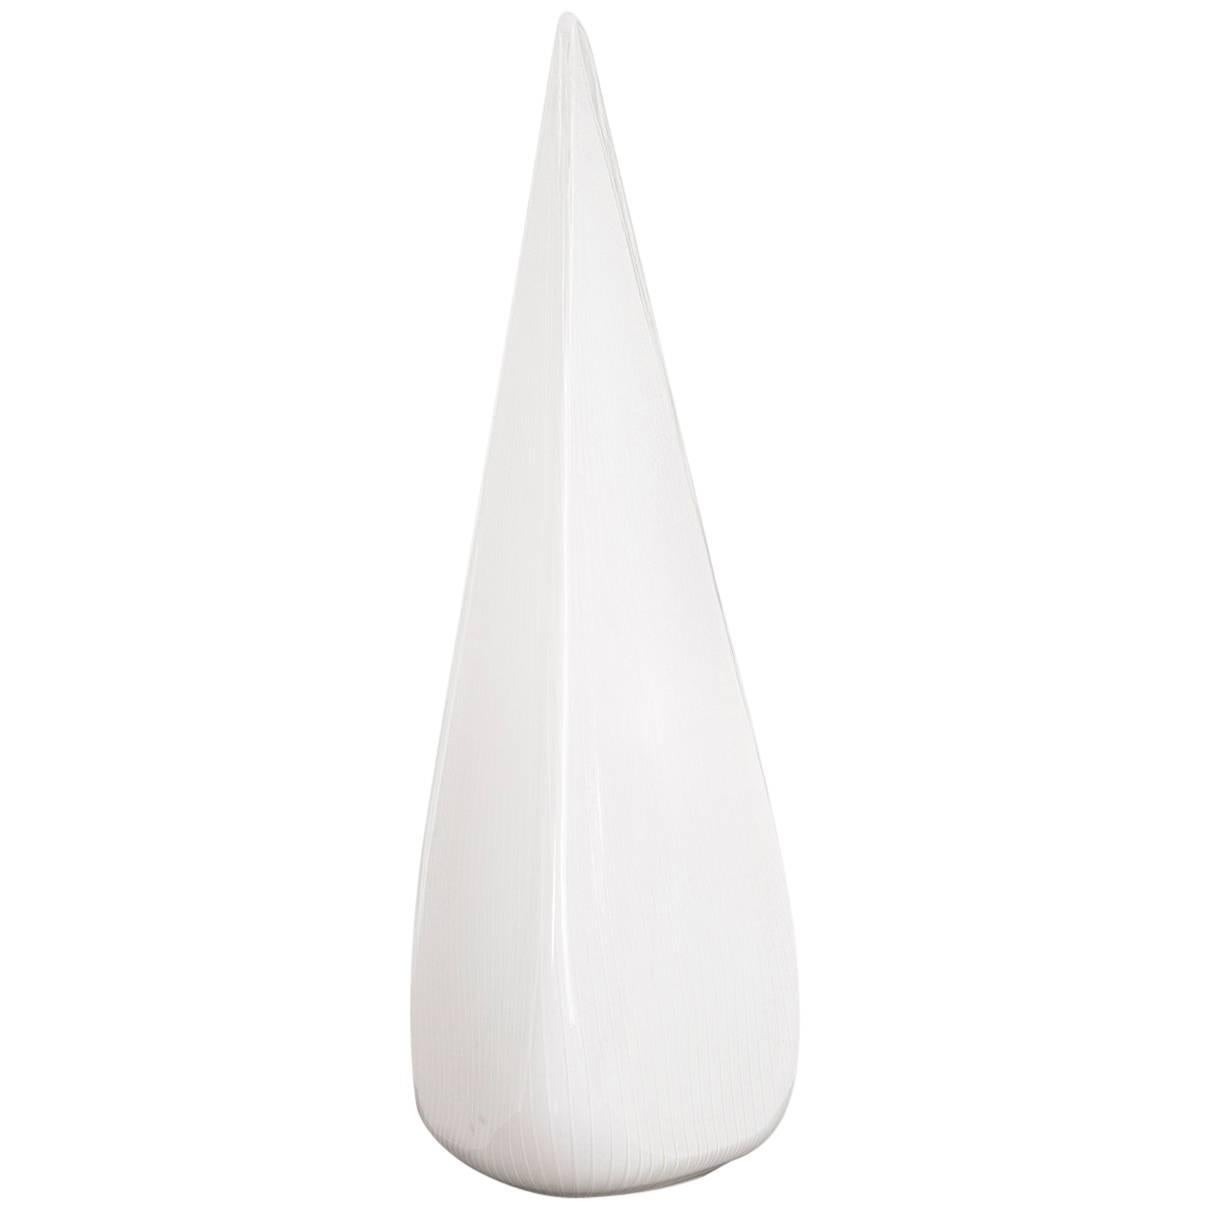 Modaluce Murano Glass Table Lamp For Sale